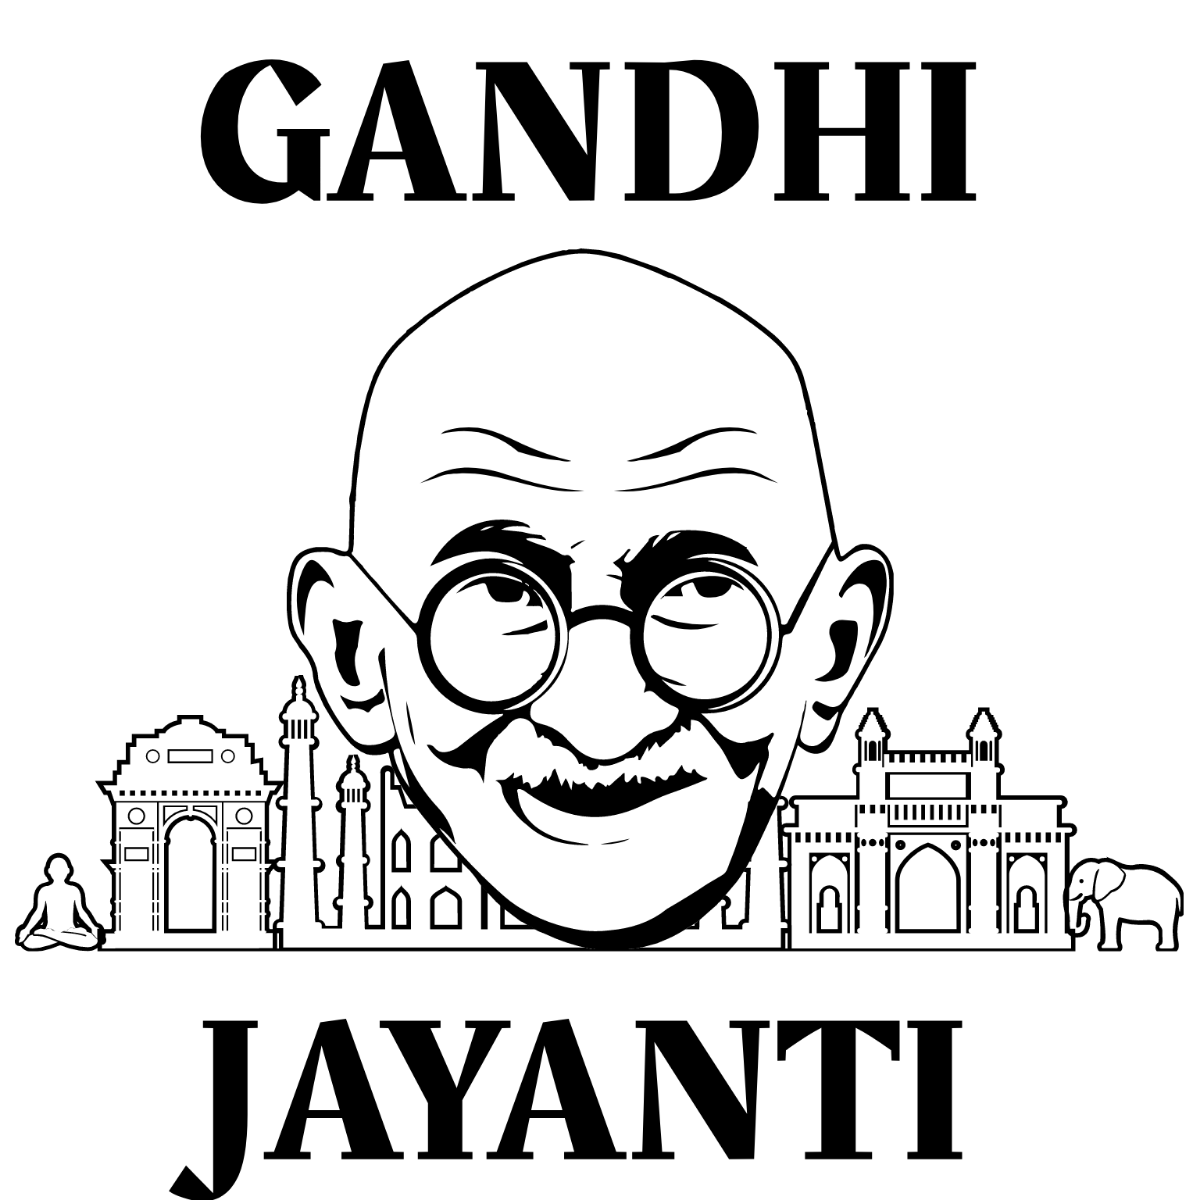 Gandhi Jayanti Drawing Vector